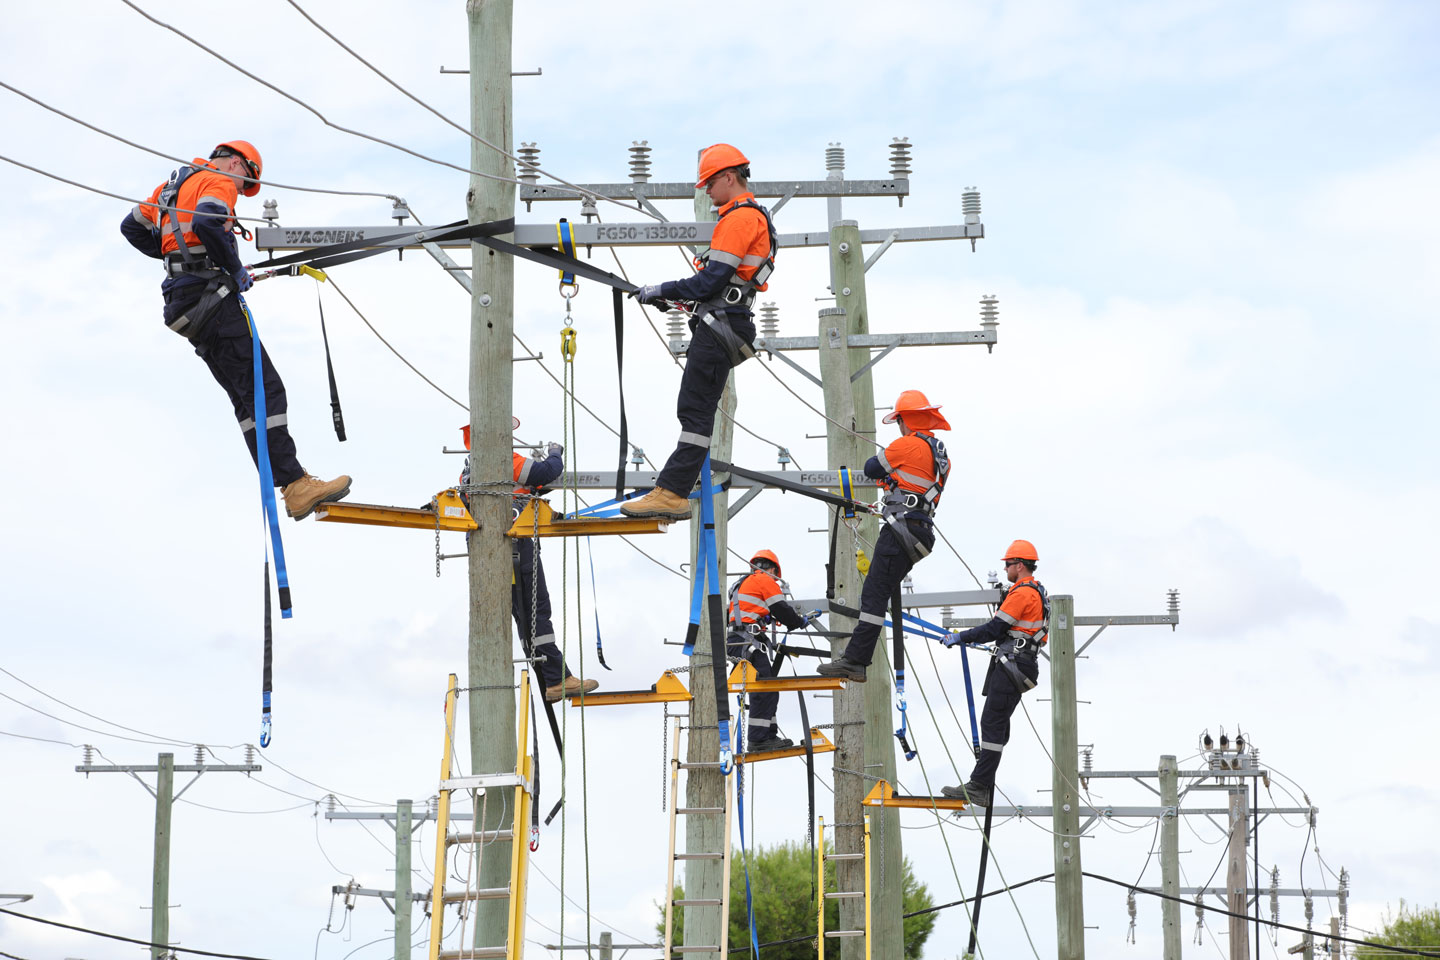 Apprentices conducting power pole maintenance exercise